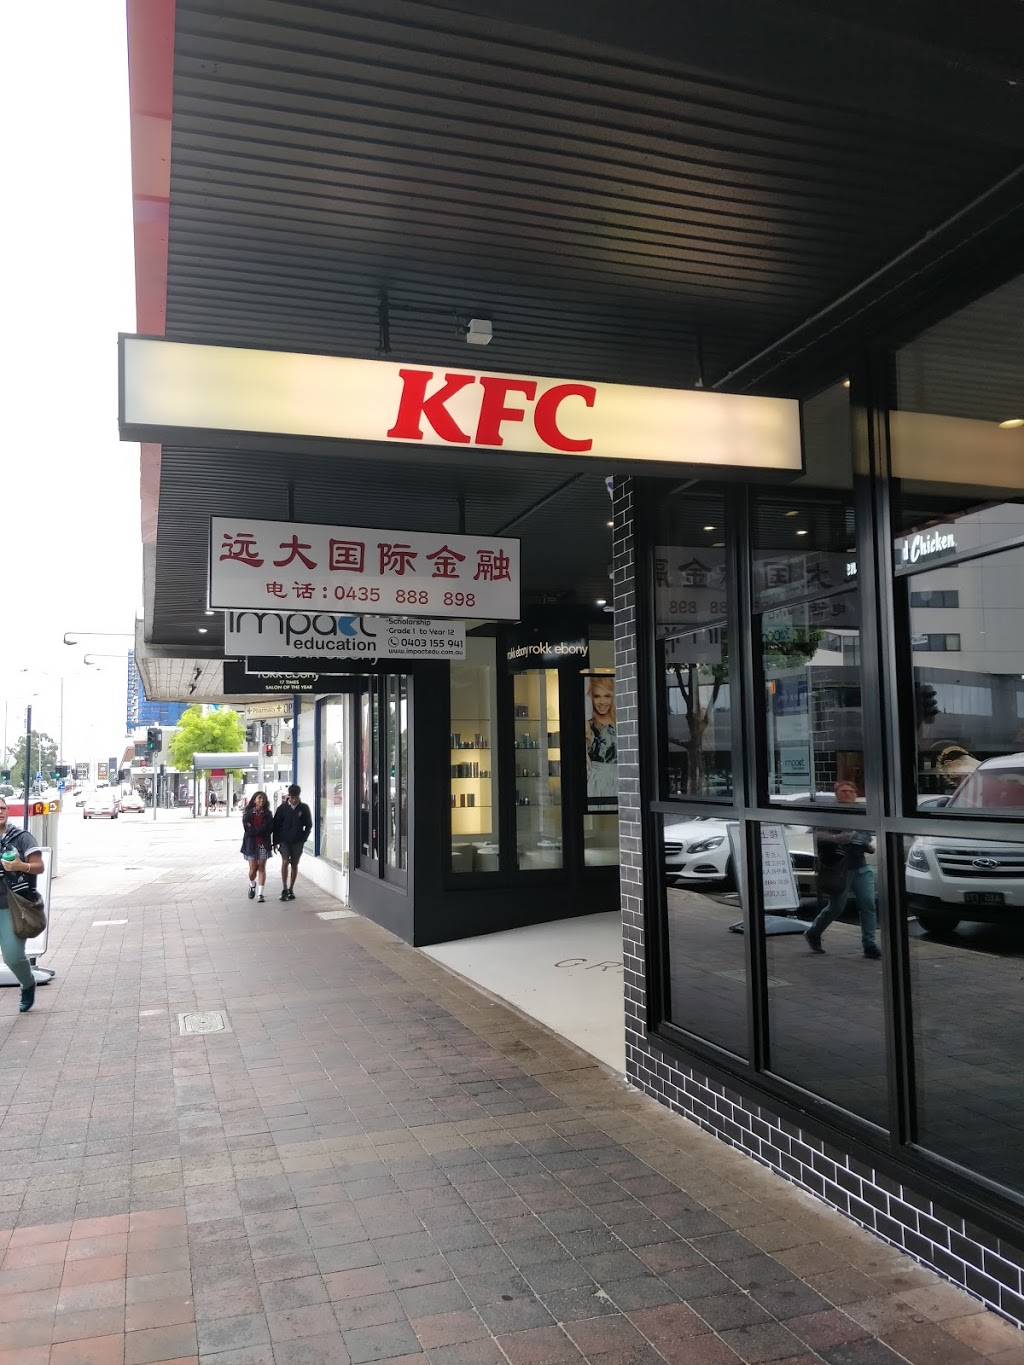 KFC Glen Waverley Central | restaurant | 2/64-66 Kingsway, Glen Waverley VIC 3150, Australia | 0385247868 OR +61 3 8524 7868